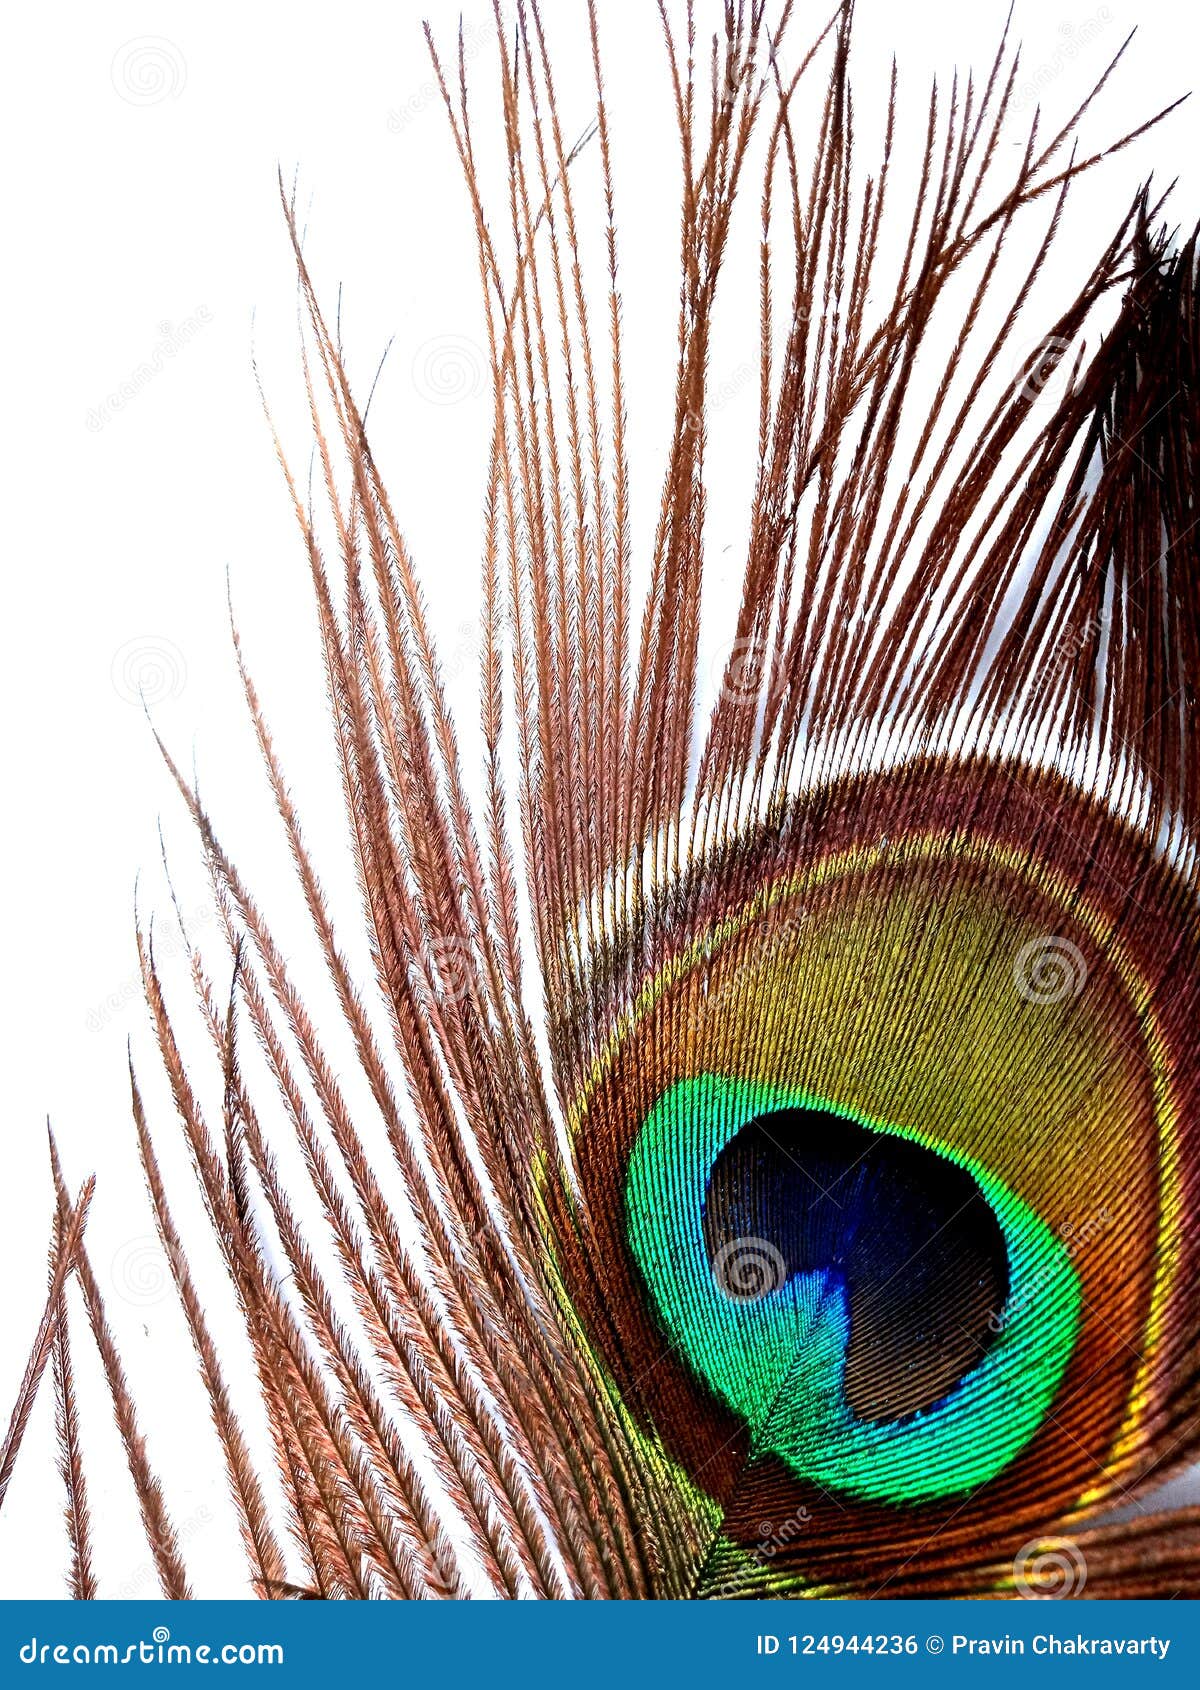 Eye of peacock - detail stock photo. Image of copy, elegance - 124944236